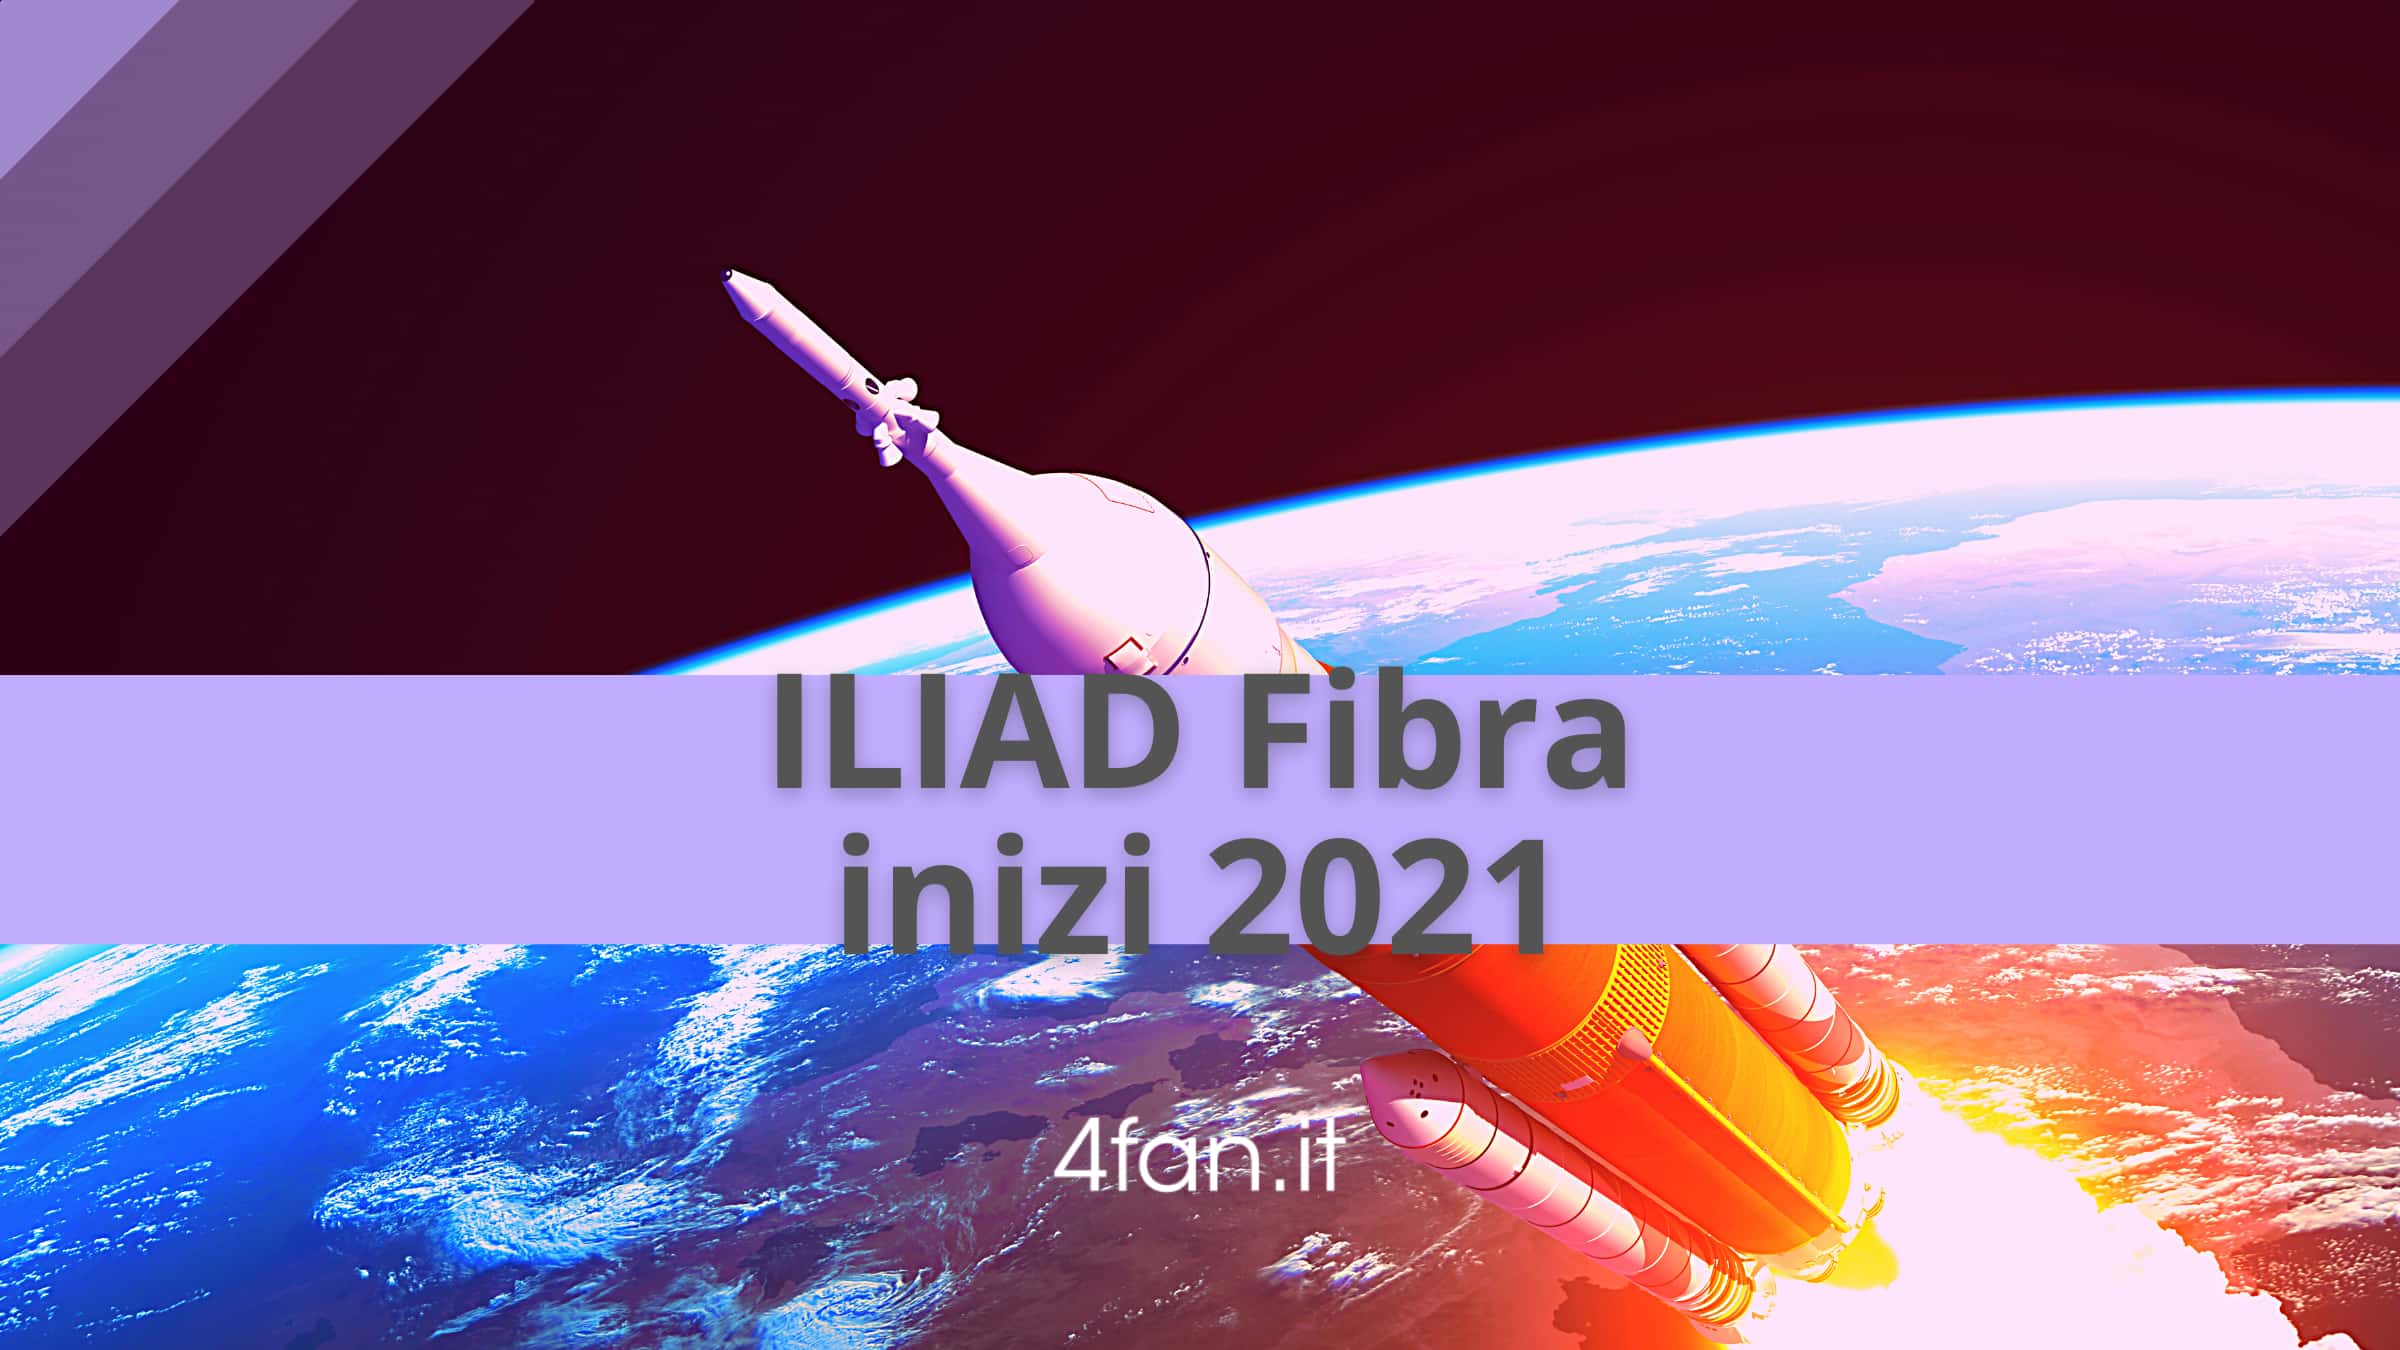 Iliad Fibra 2021